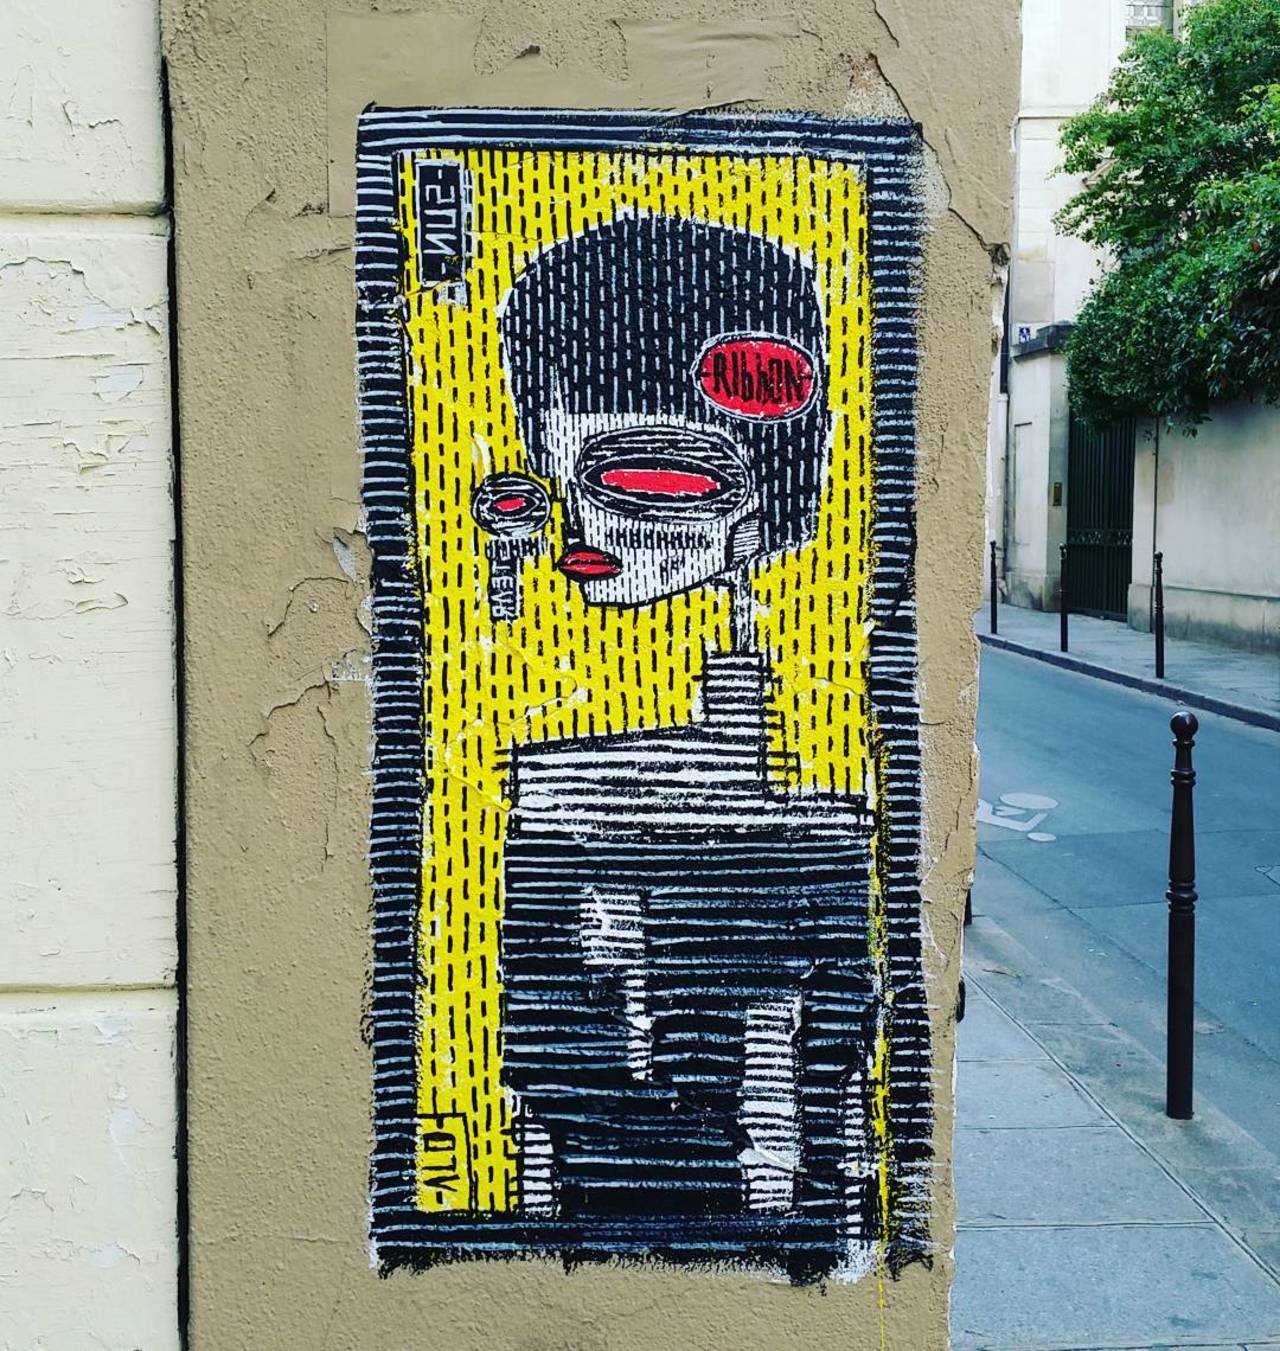 #Paris #graffiti photo by @mrsaurelie http://ift.tt/1KVYxDk #StreetArt http://t.co/Q2qIl6pAYF